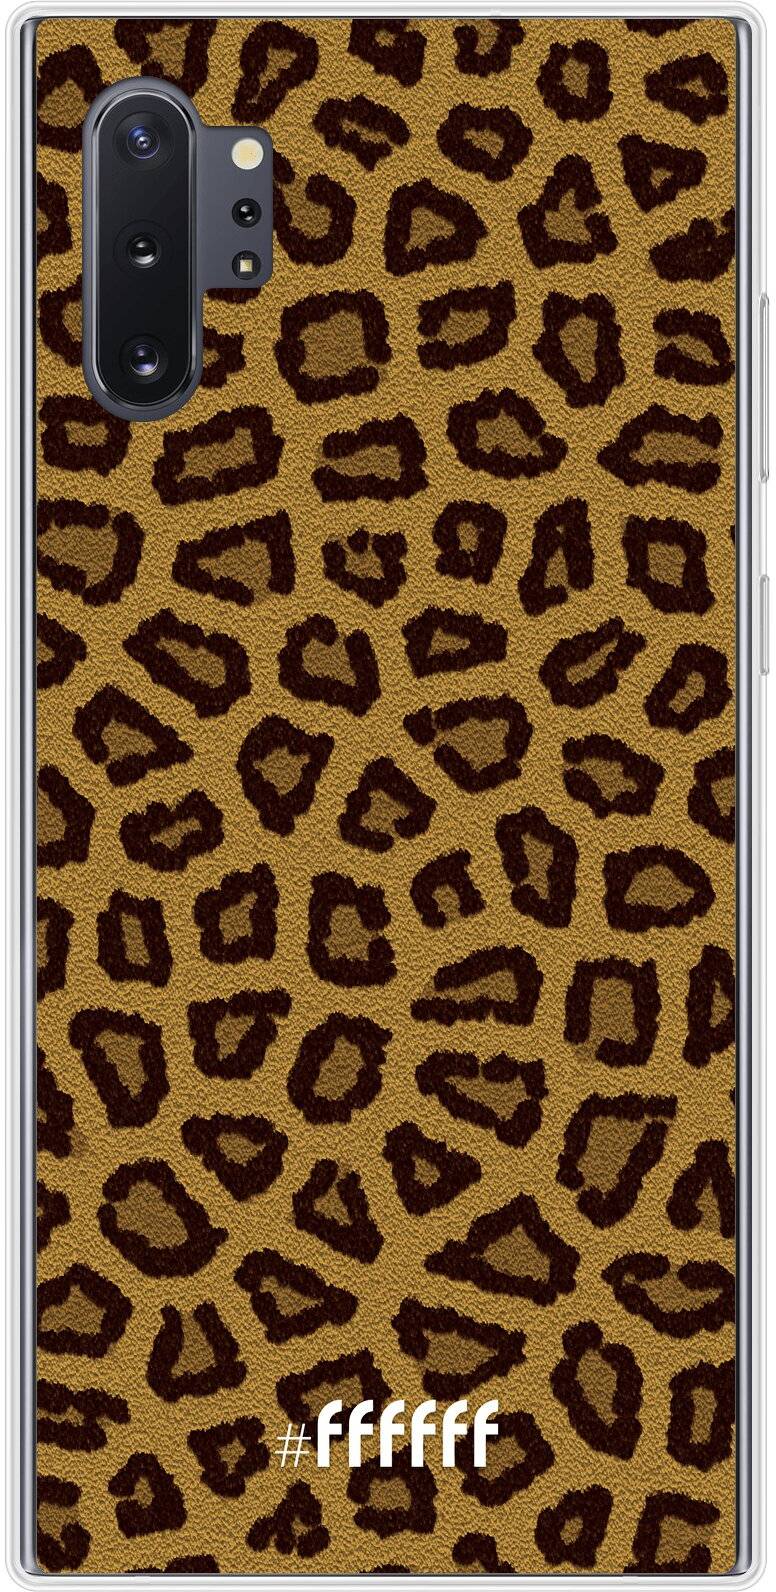 Leopard Print Galaxy Note 10 Plus